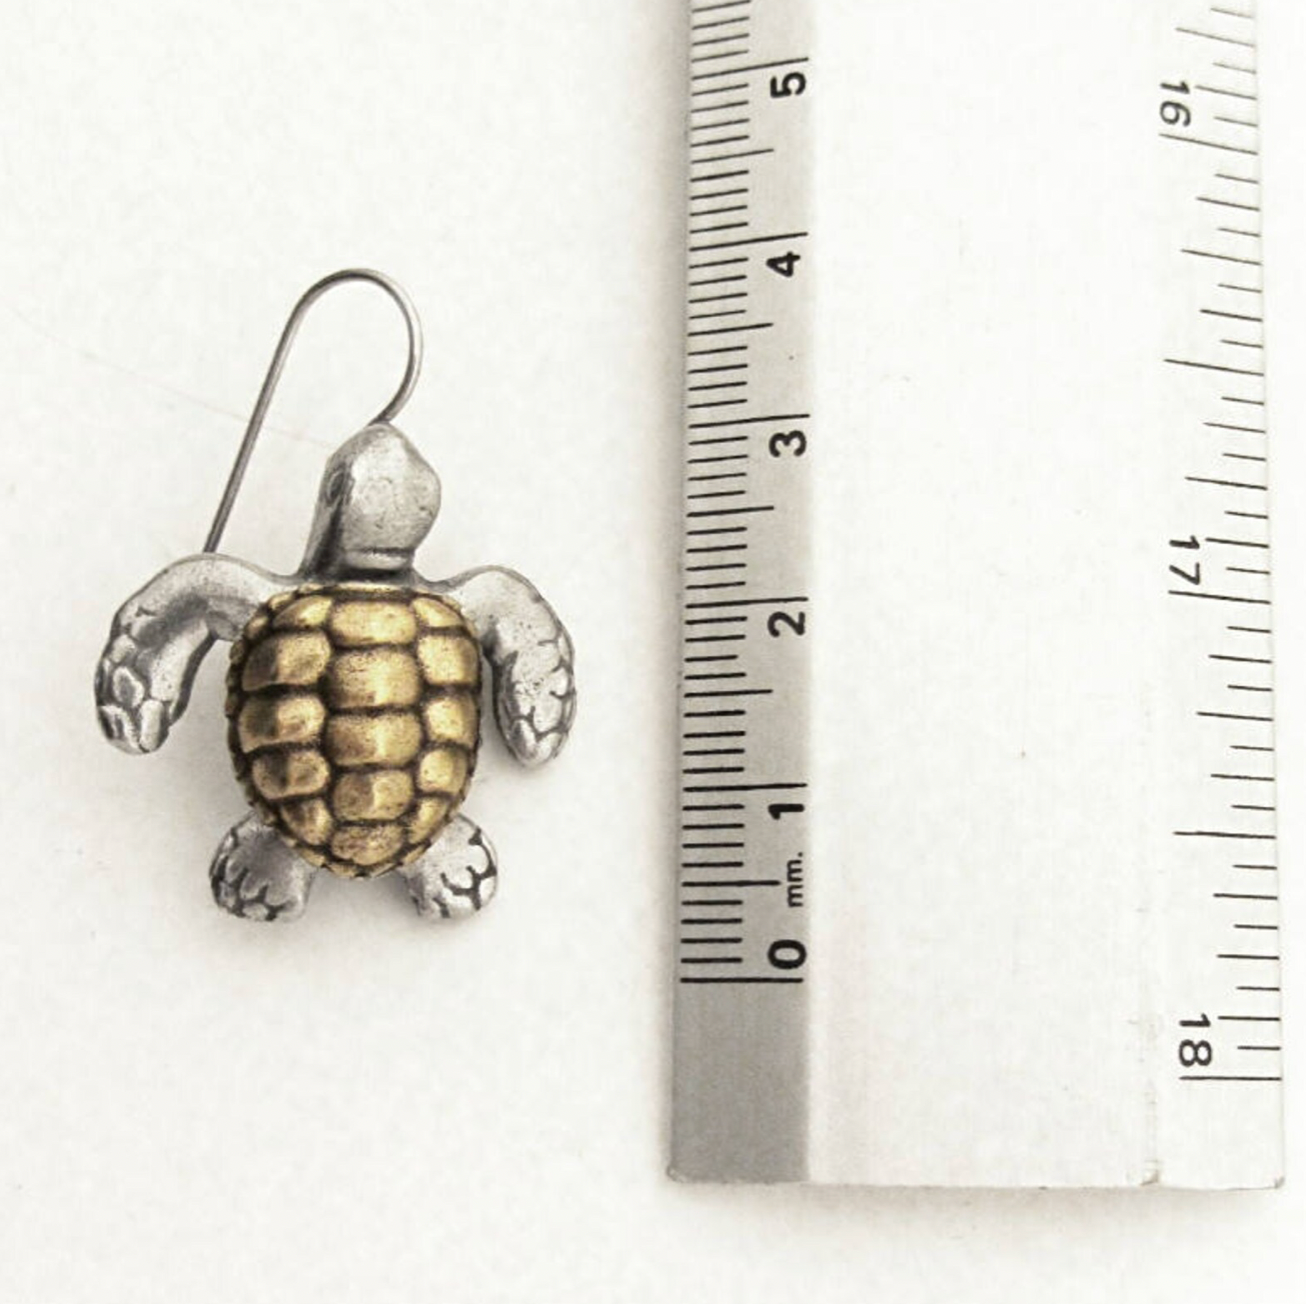 Sea Turtle Earrings - Loggerhead Turtle, Turtle Jewelry Chris Taylor